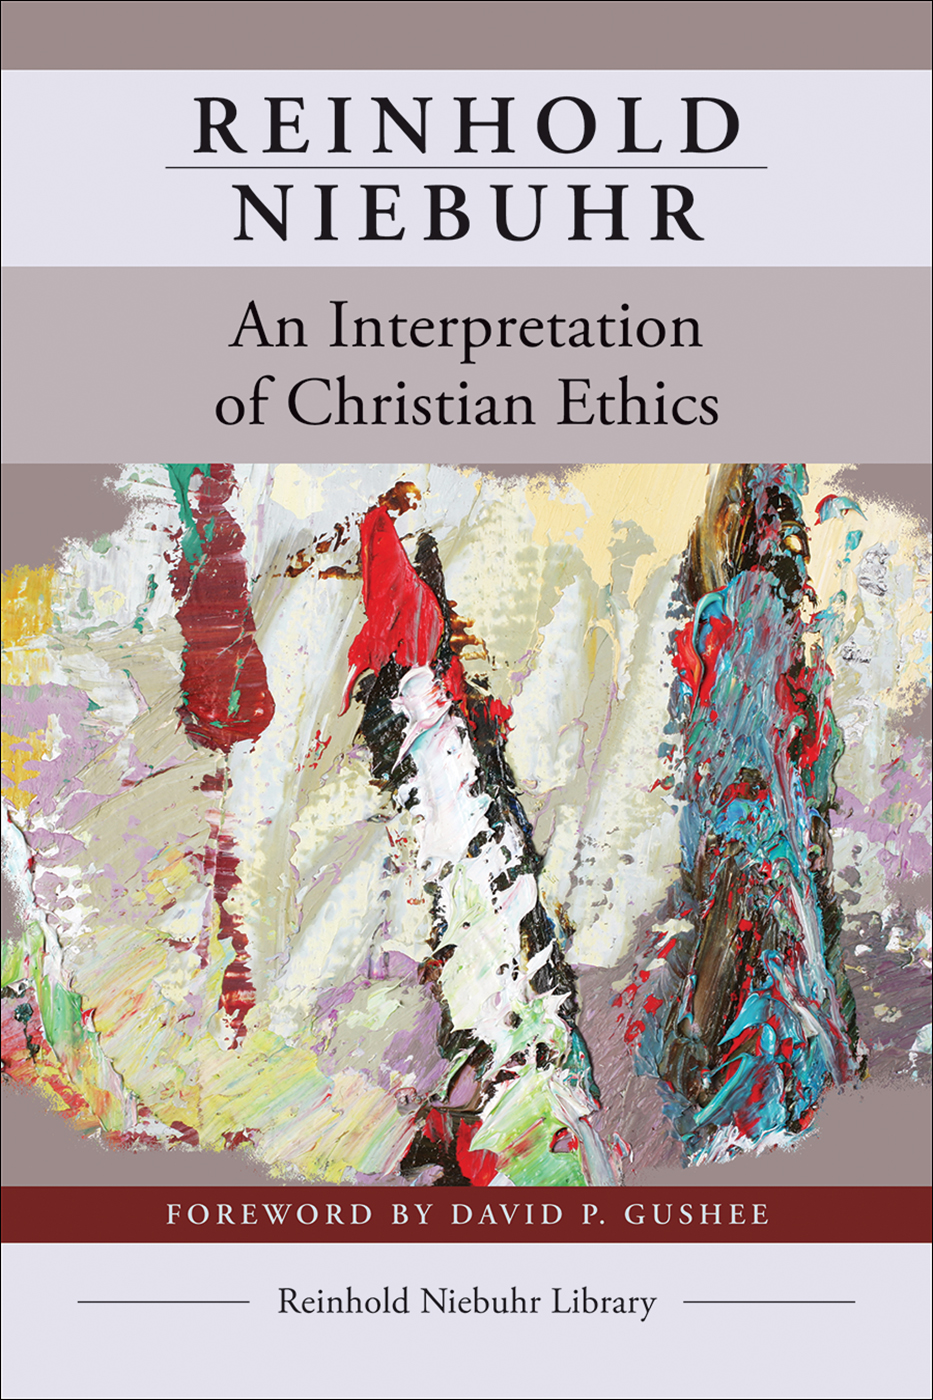 An Interpretation of Christian Ethics